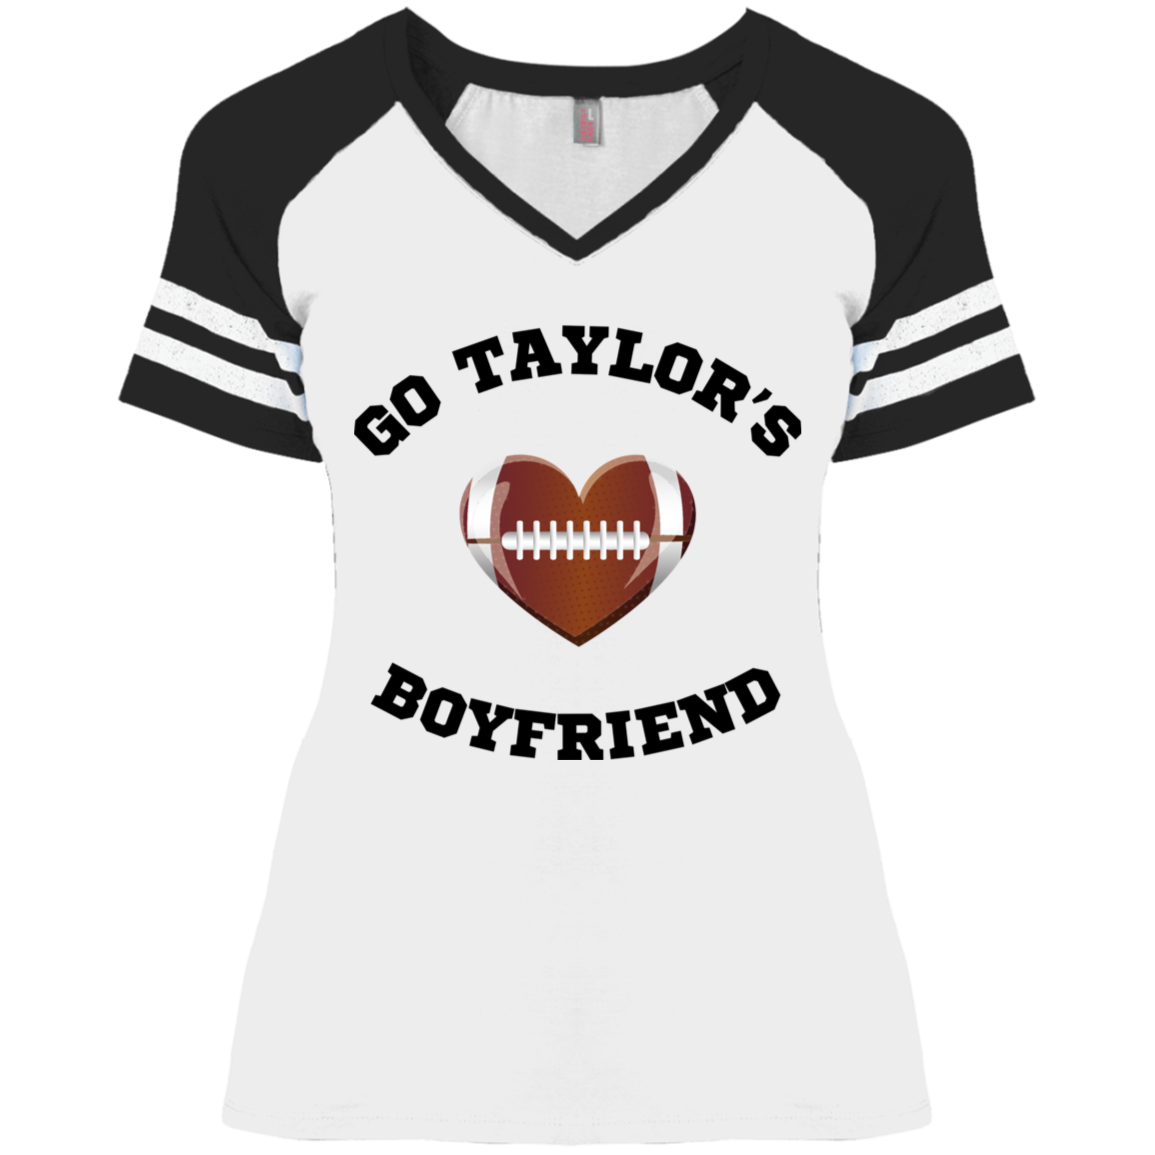 Go Taylor's Boyfriend Ladies' Game V-Neck T-Shirt